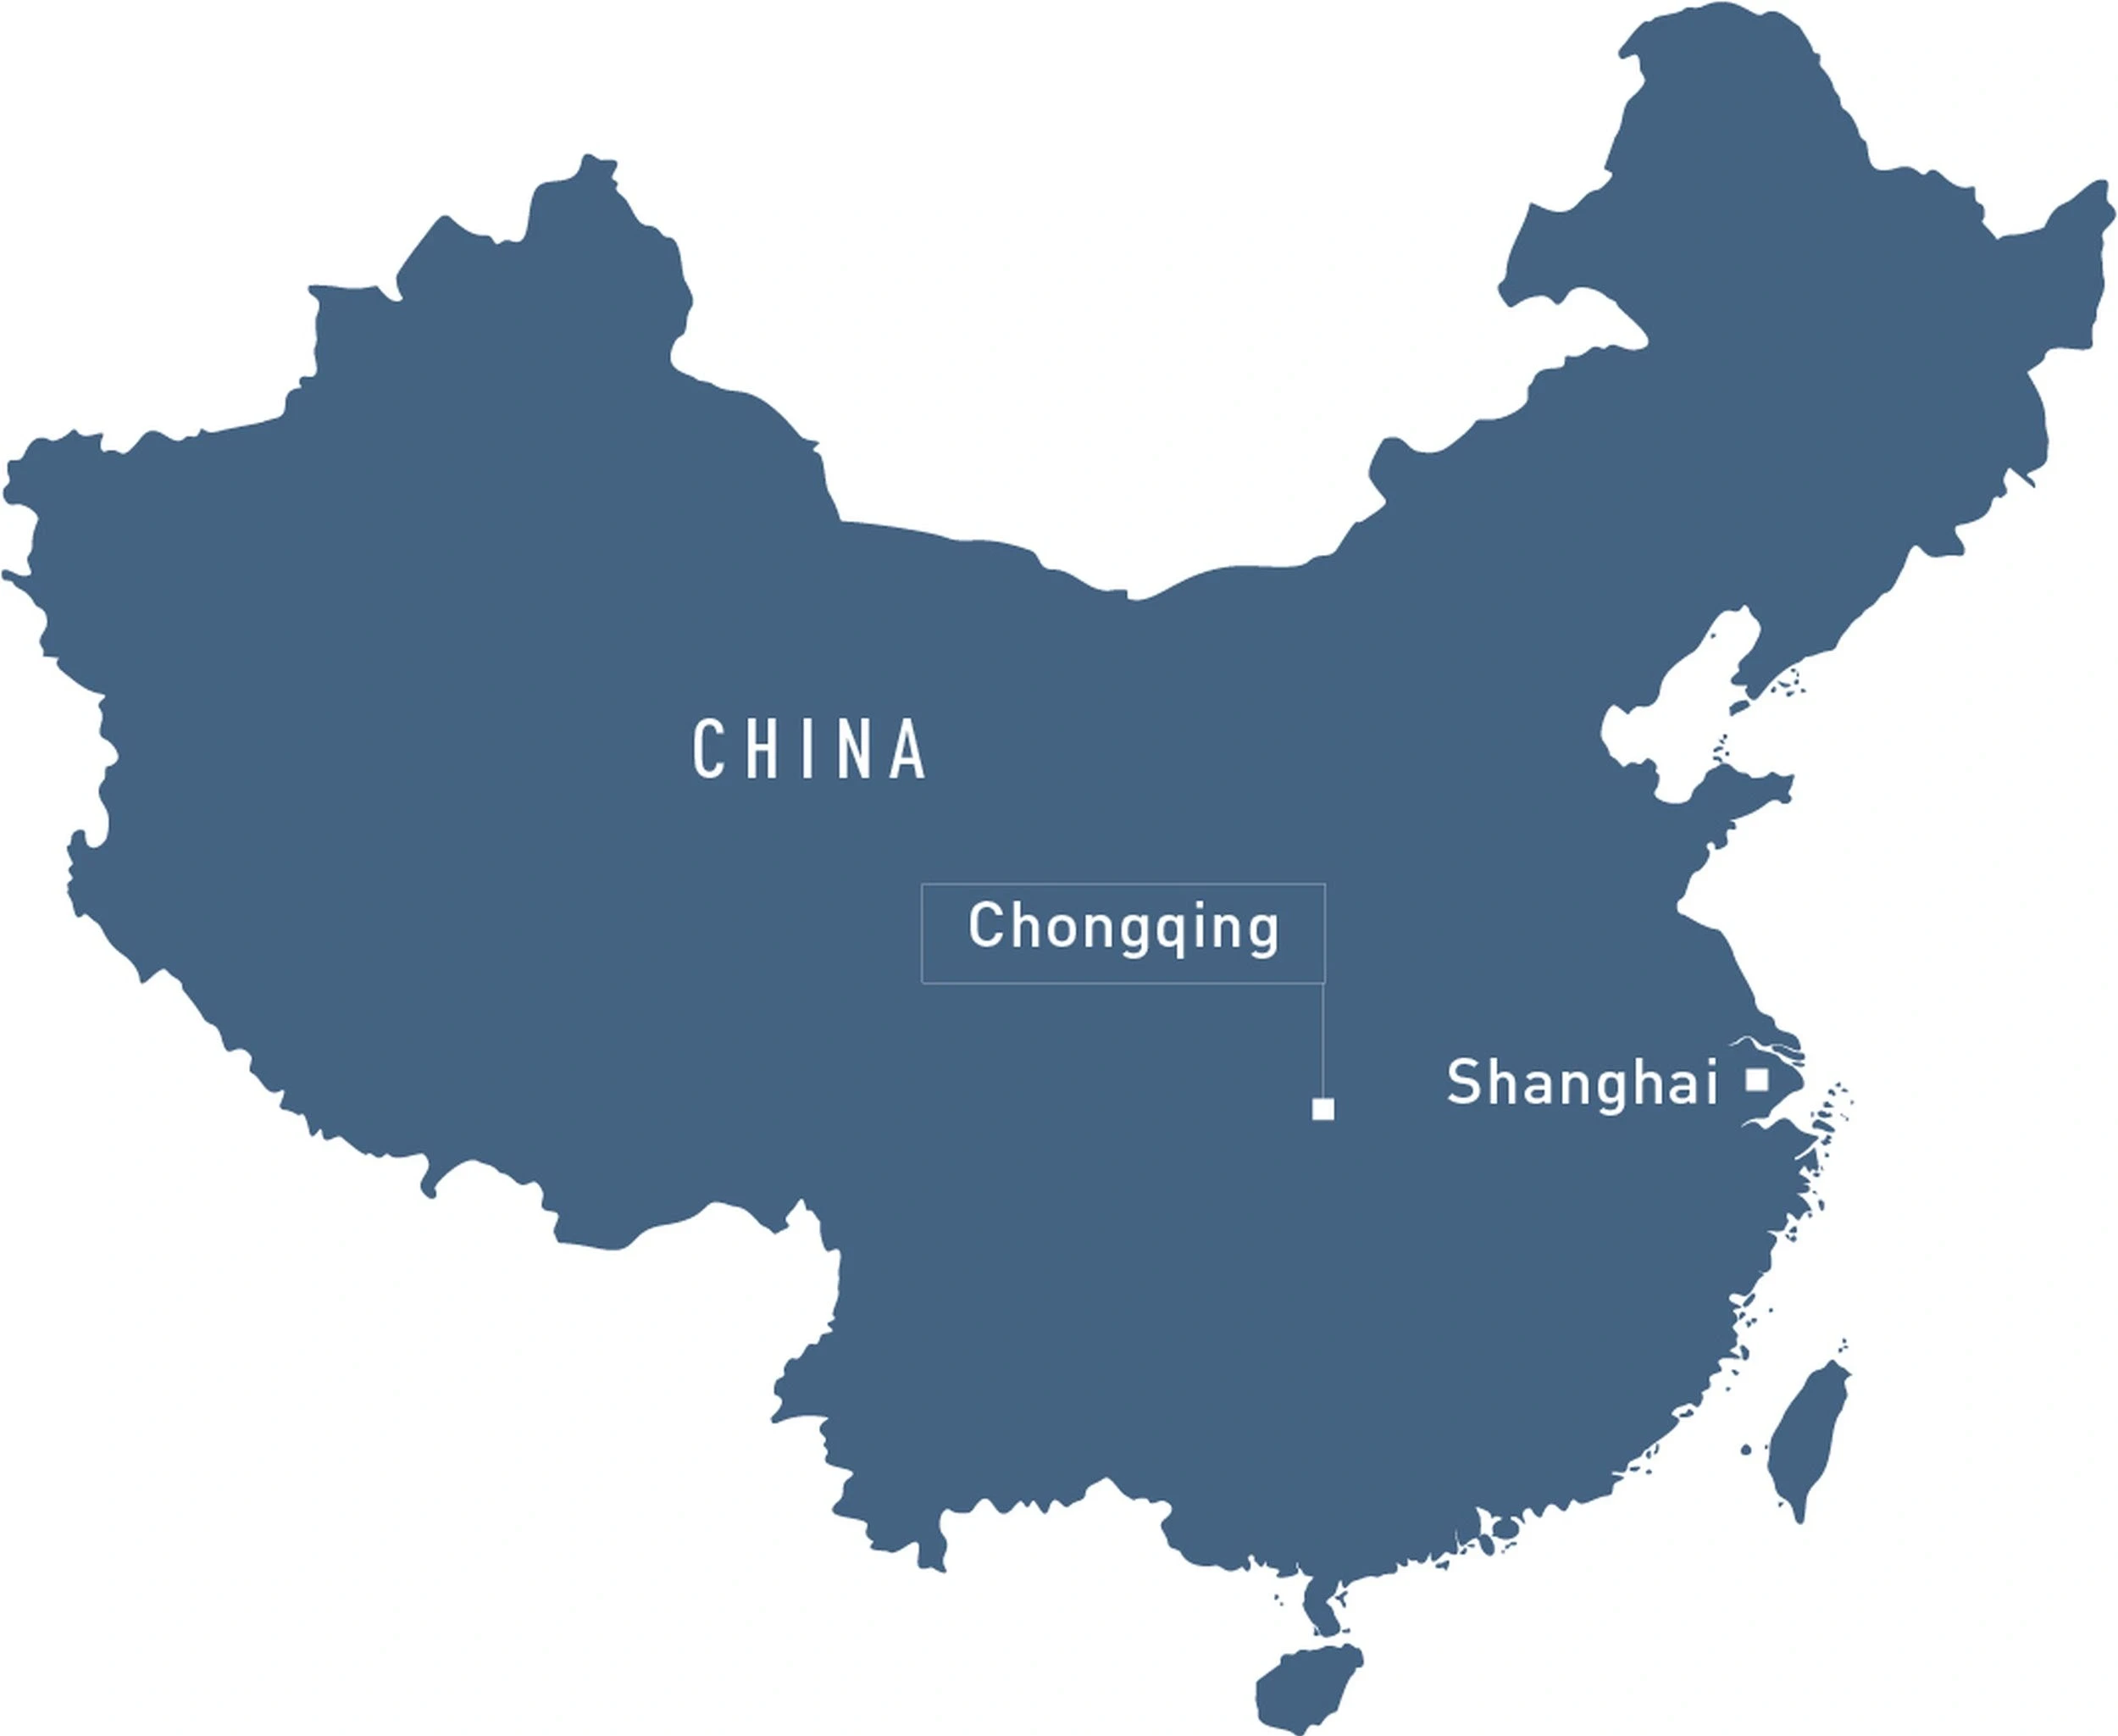 Chongqing marked on China map